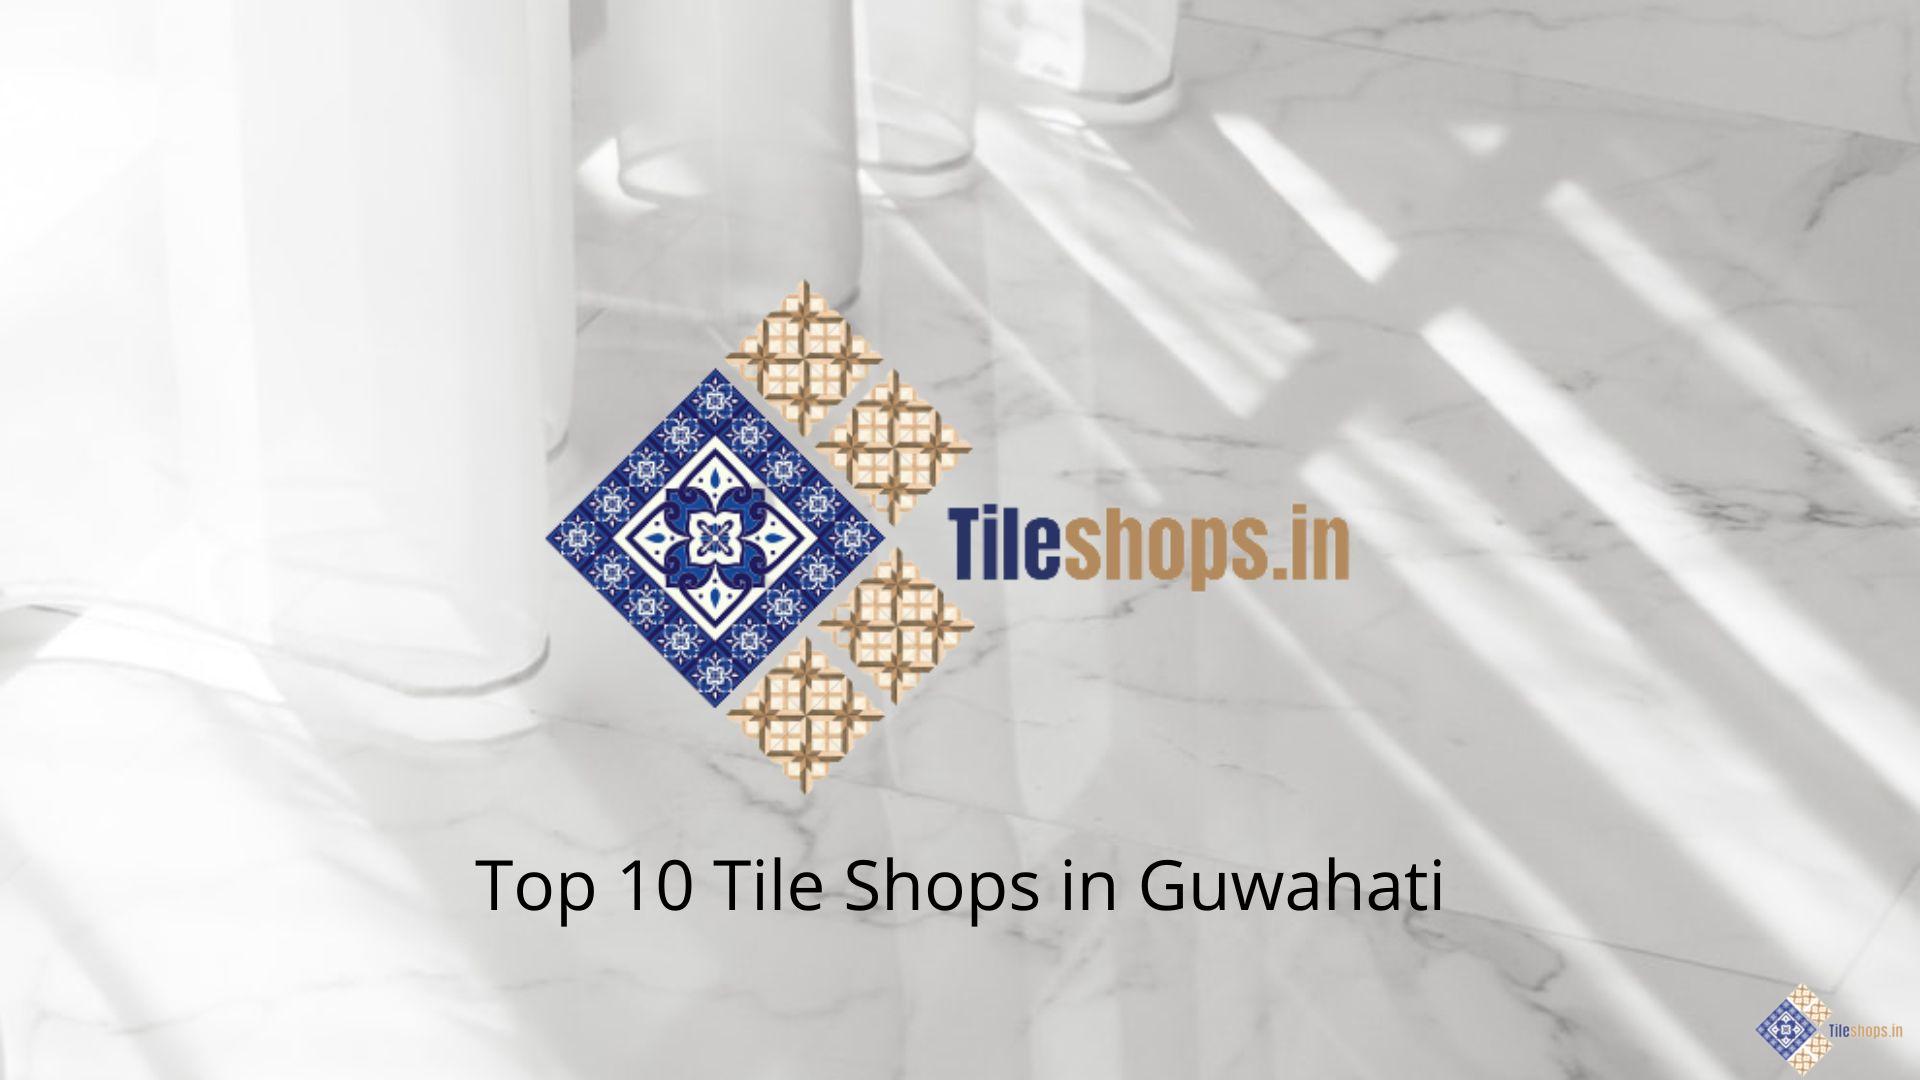 Top 10 Tile Shops in Guwahati